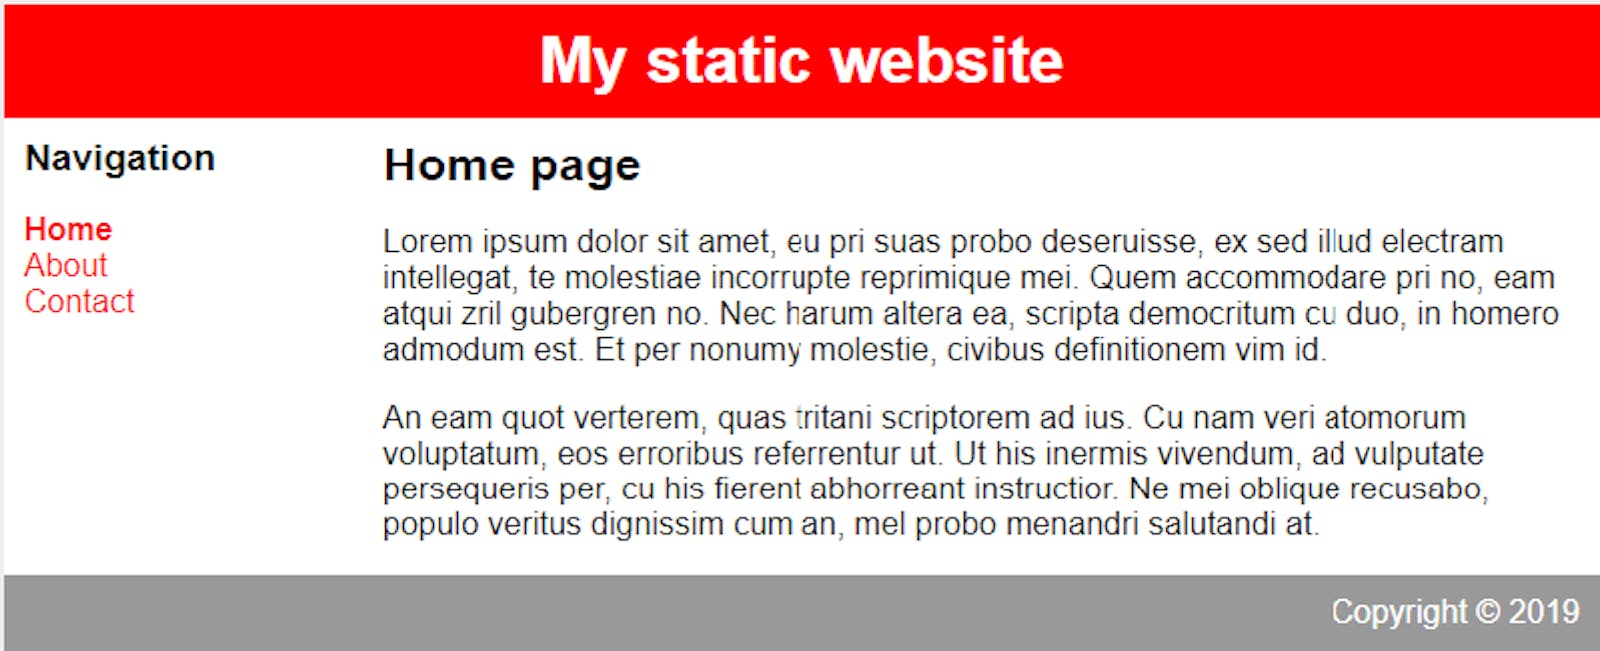 Serve static HTML files locally